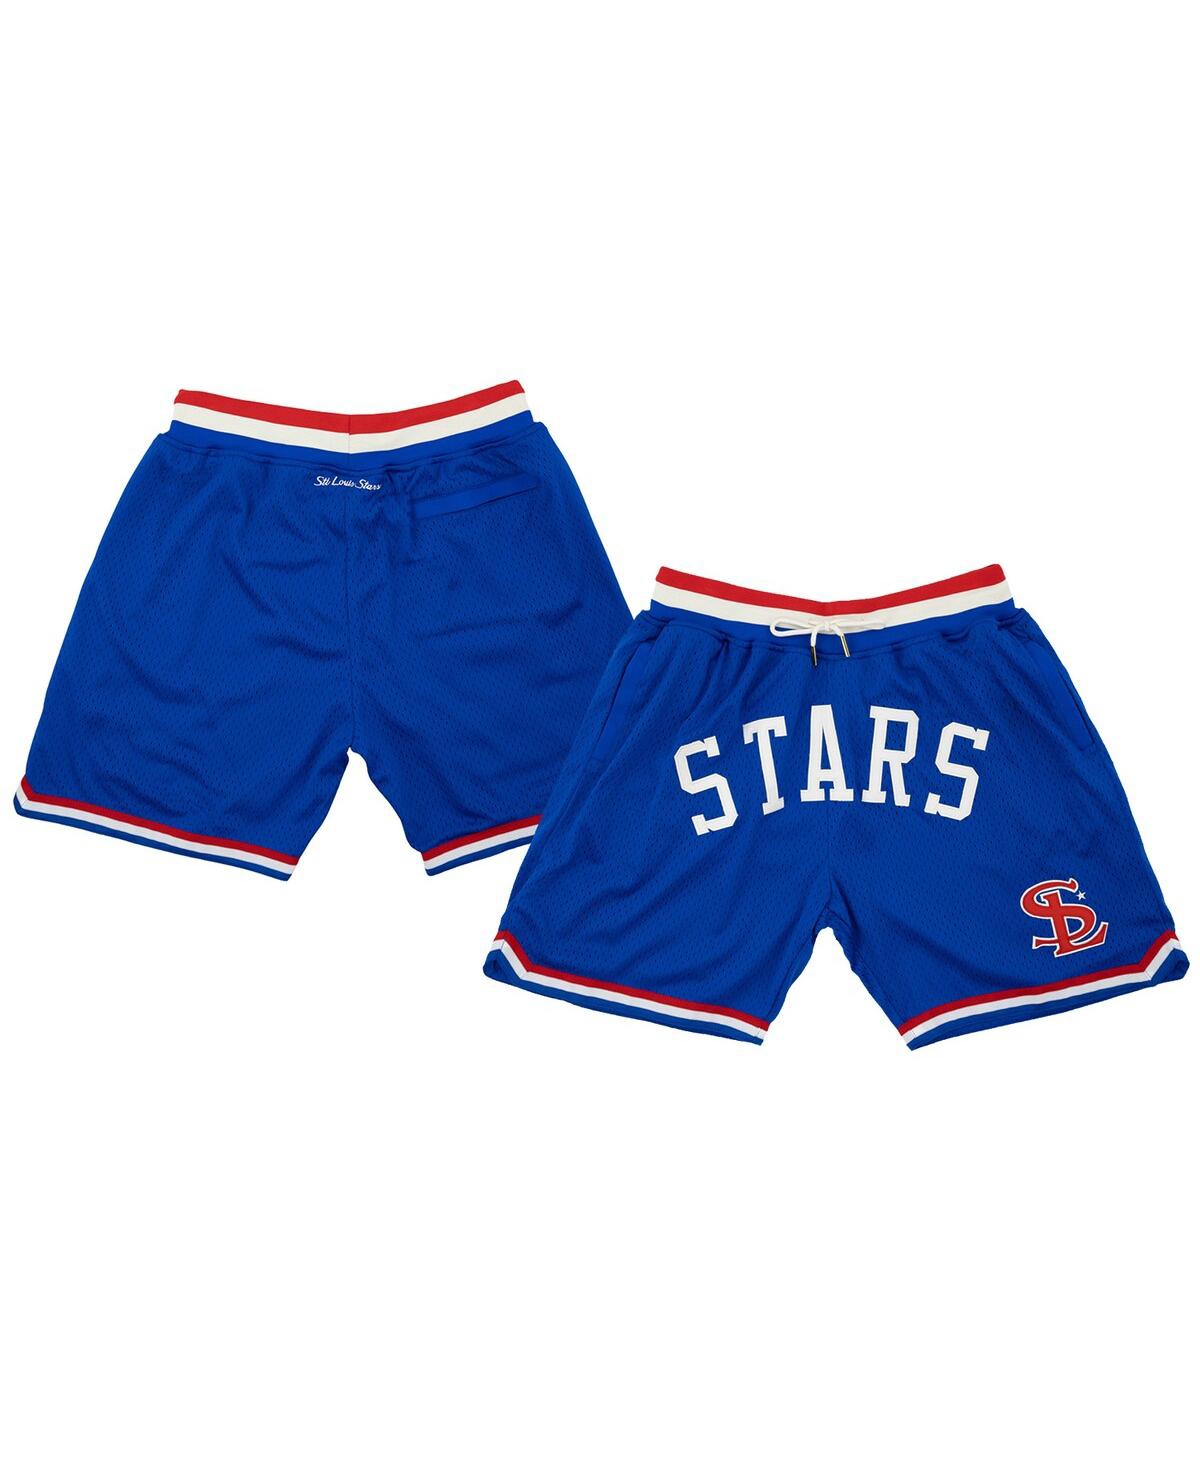 Men's Rings & Crwns Royal St. Louis Stars Replica Mesh Shorts - Royal